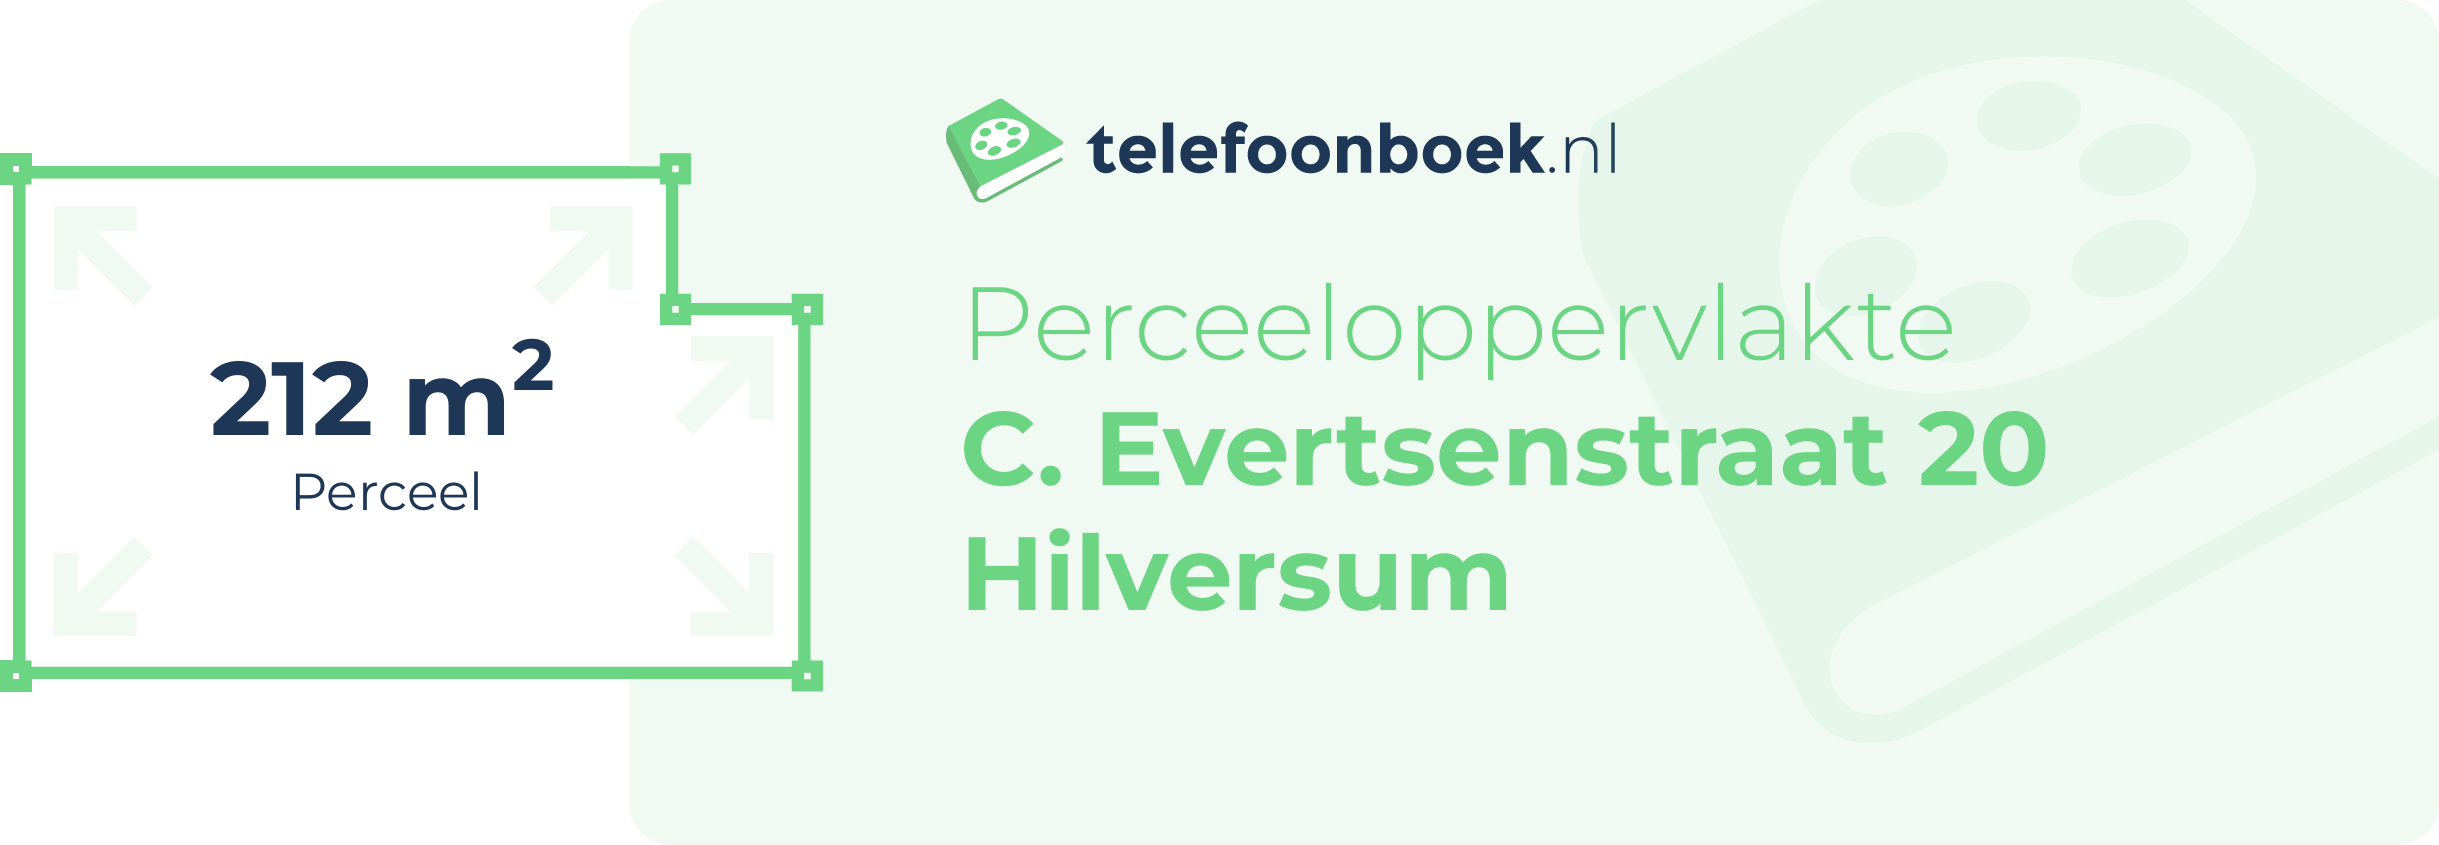 Perceeloppervlakte C. Evertsenstraat 20 Hilversum